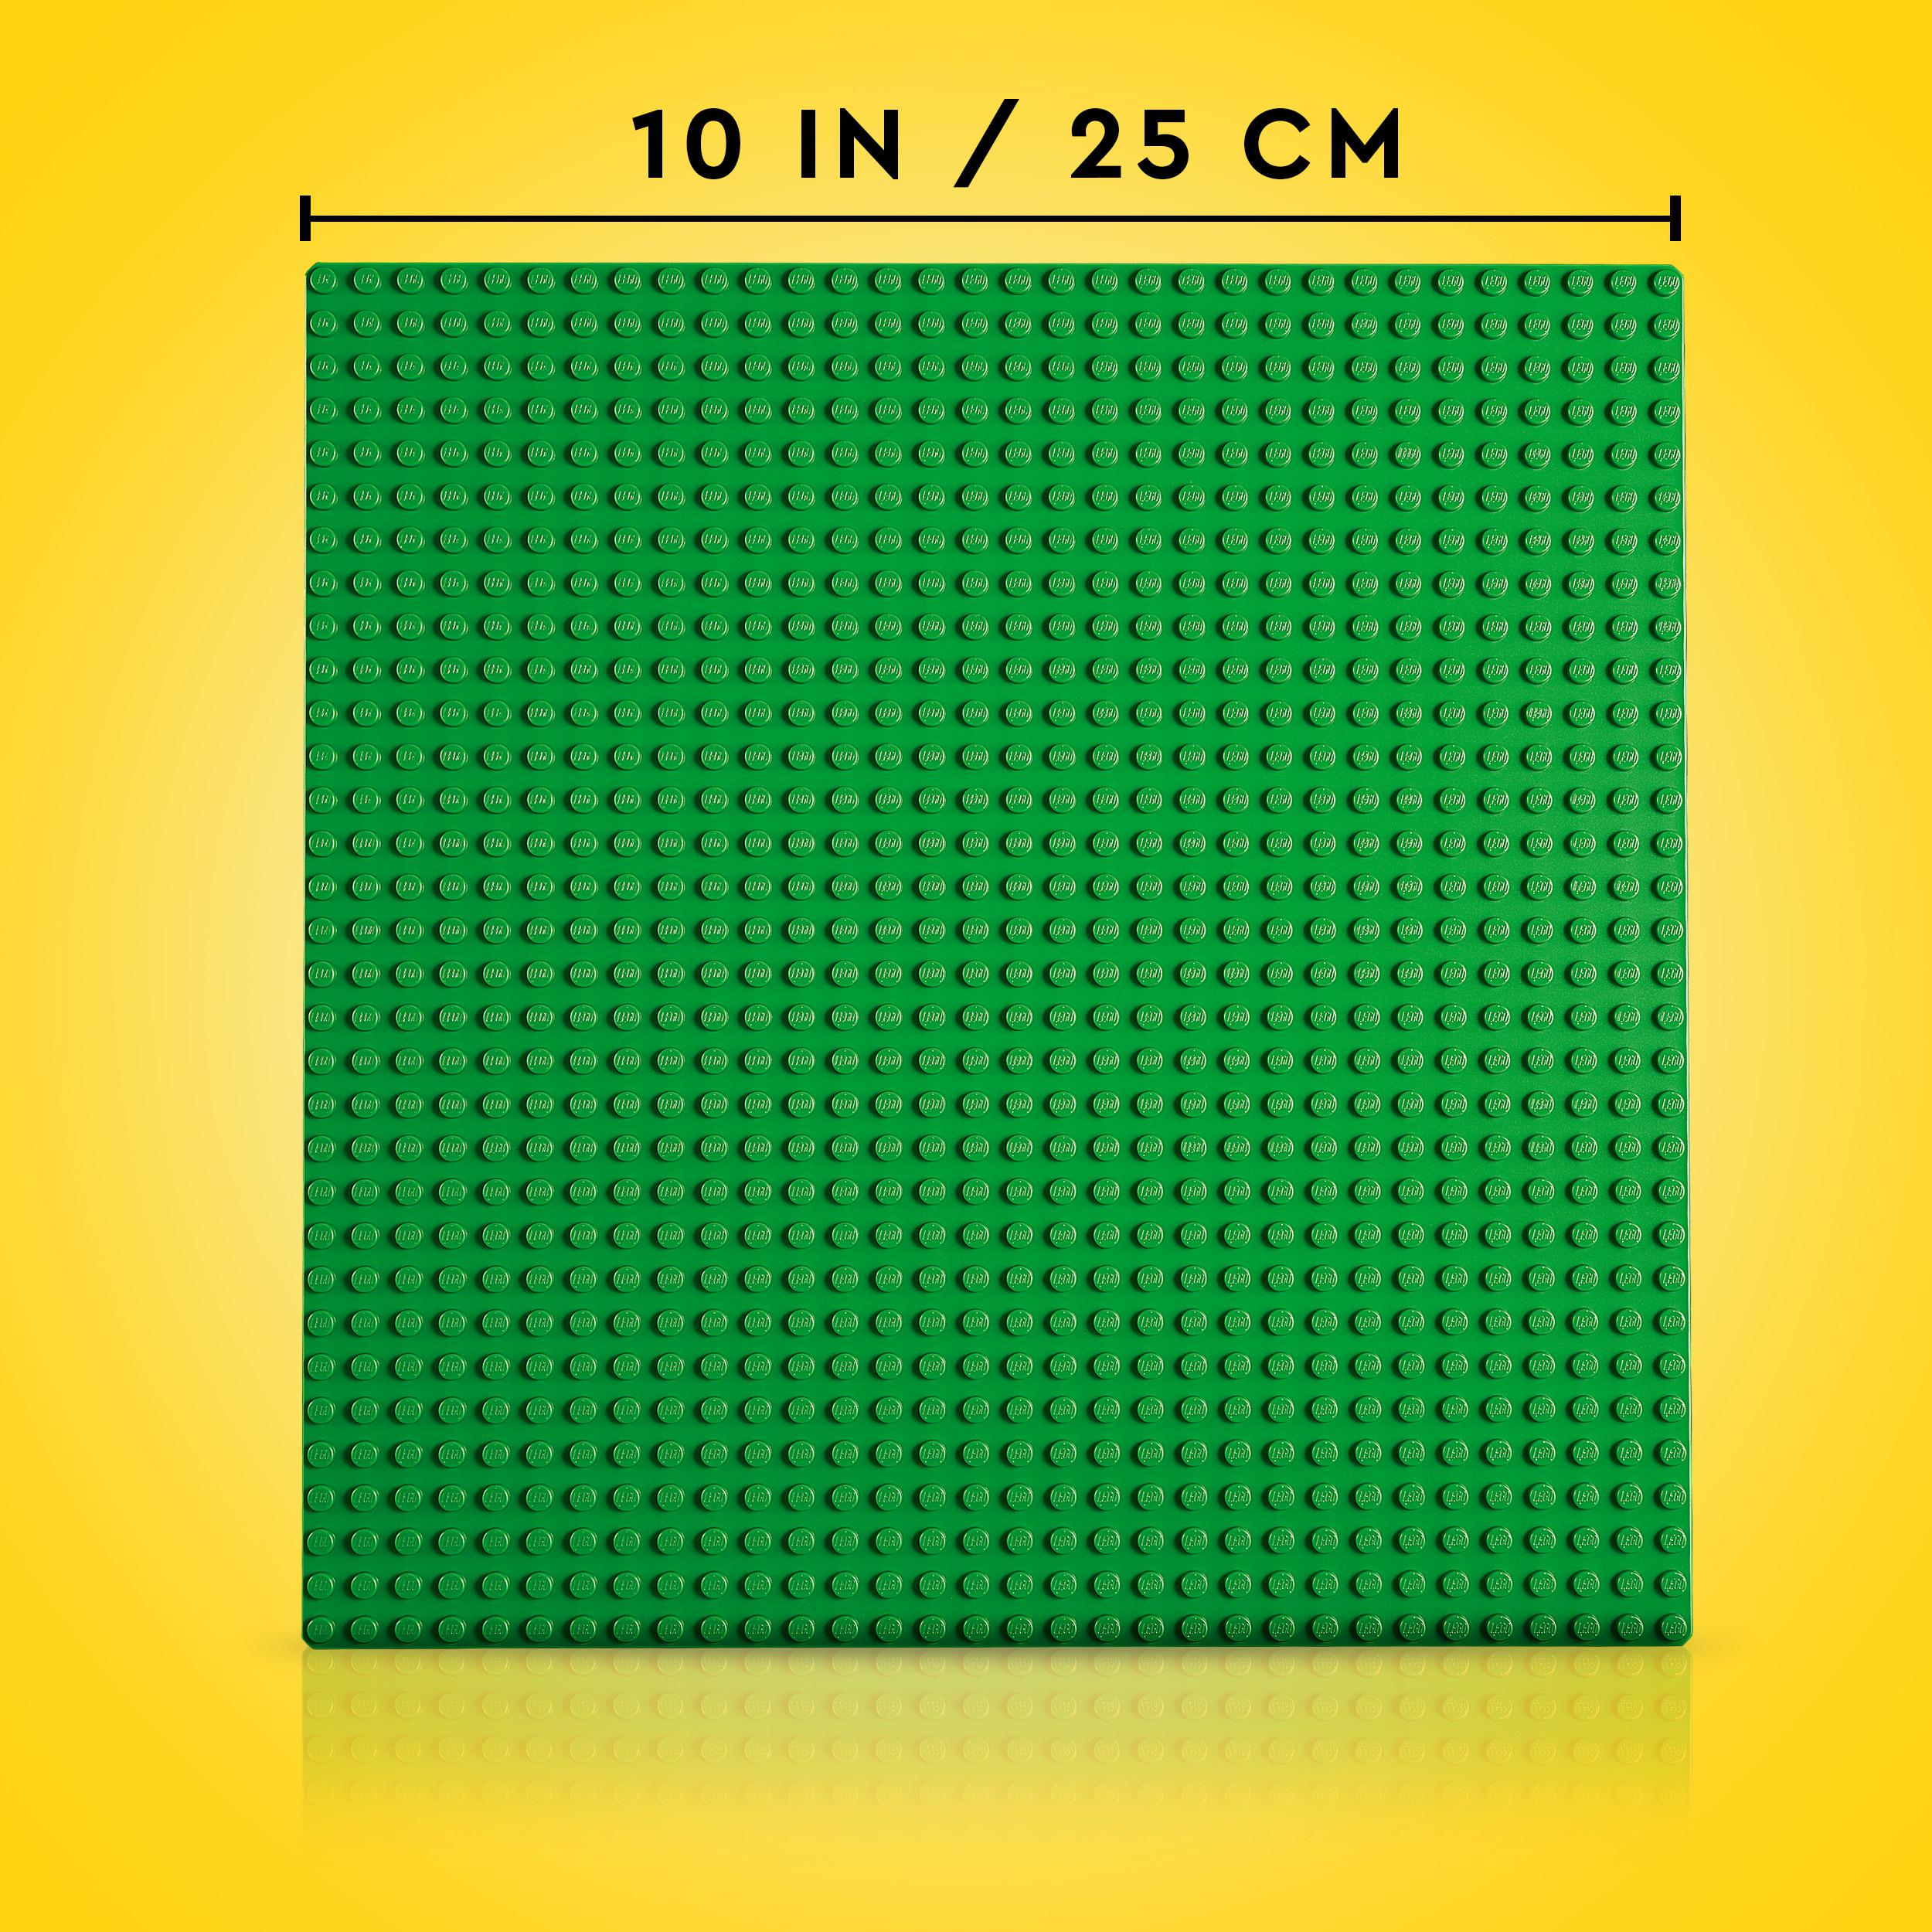 LEGO Grün 11023 Bausatz, Bauplatte Classic Grüne